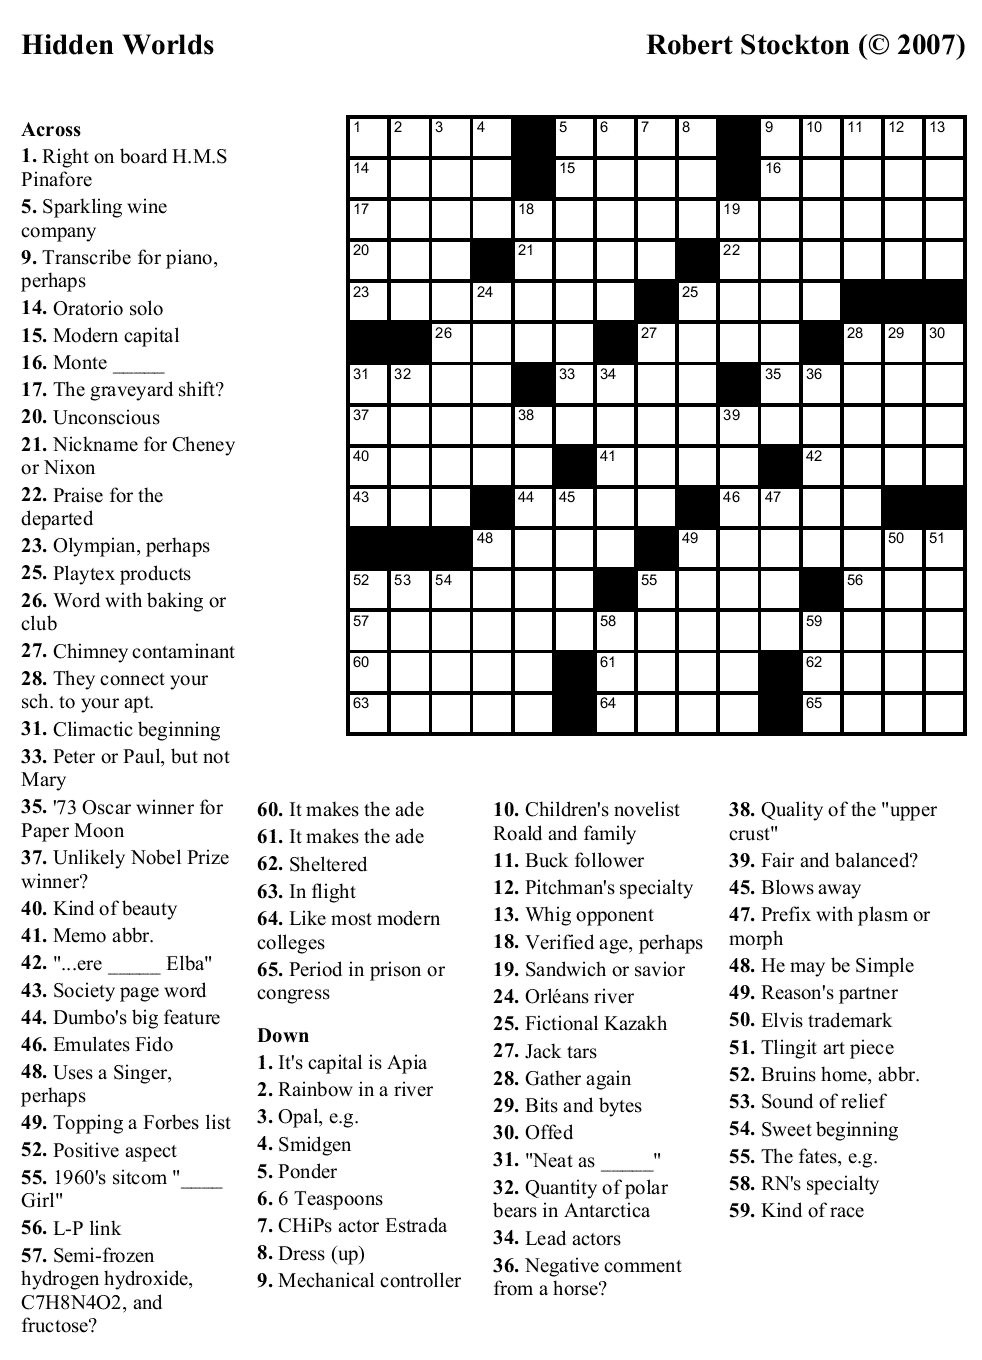 The Wednesday Wars Crossword Printable Puzzle